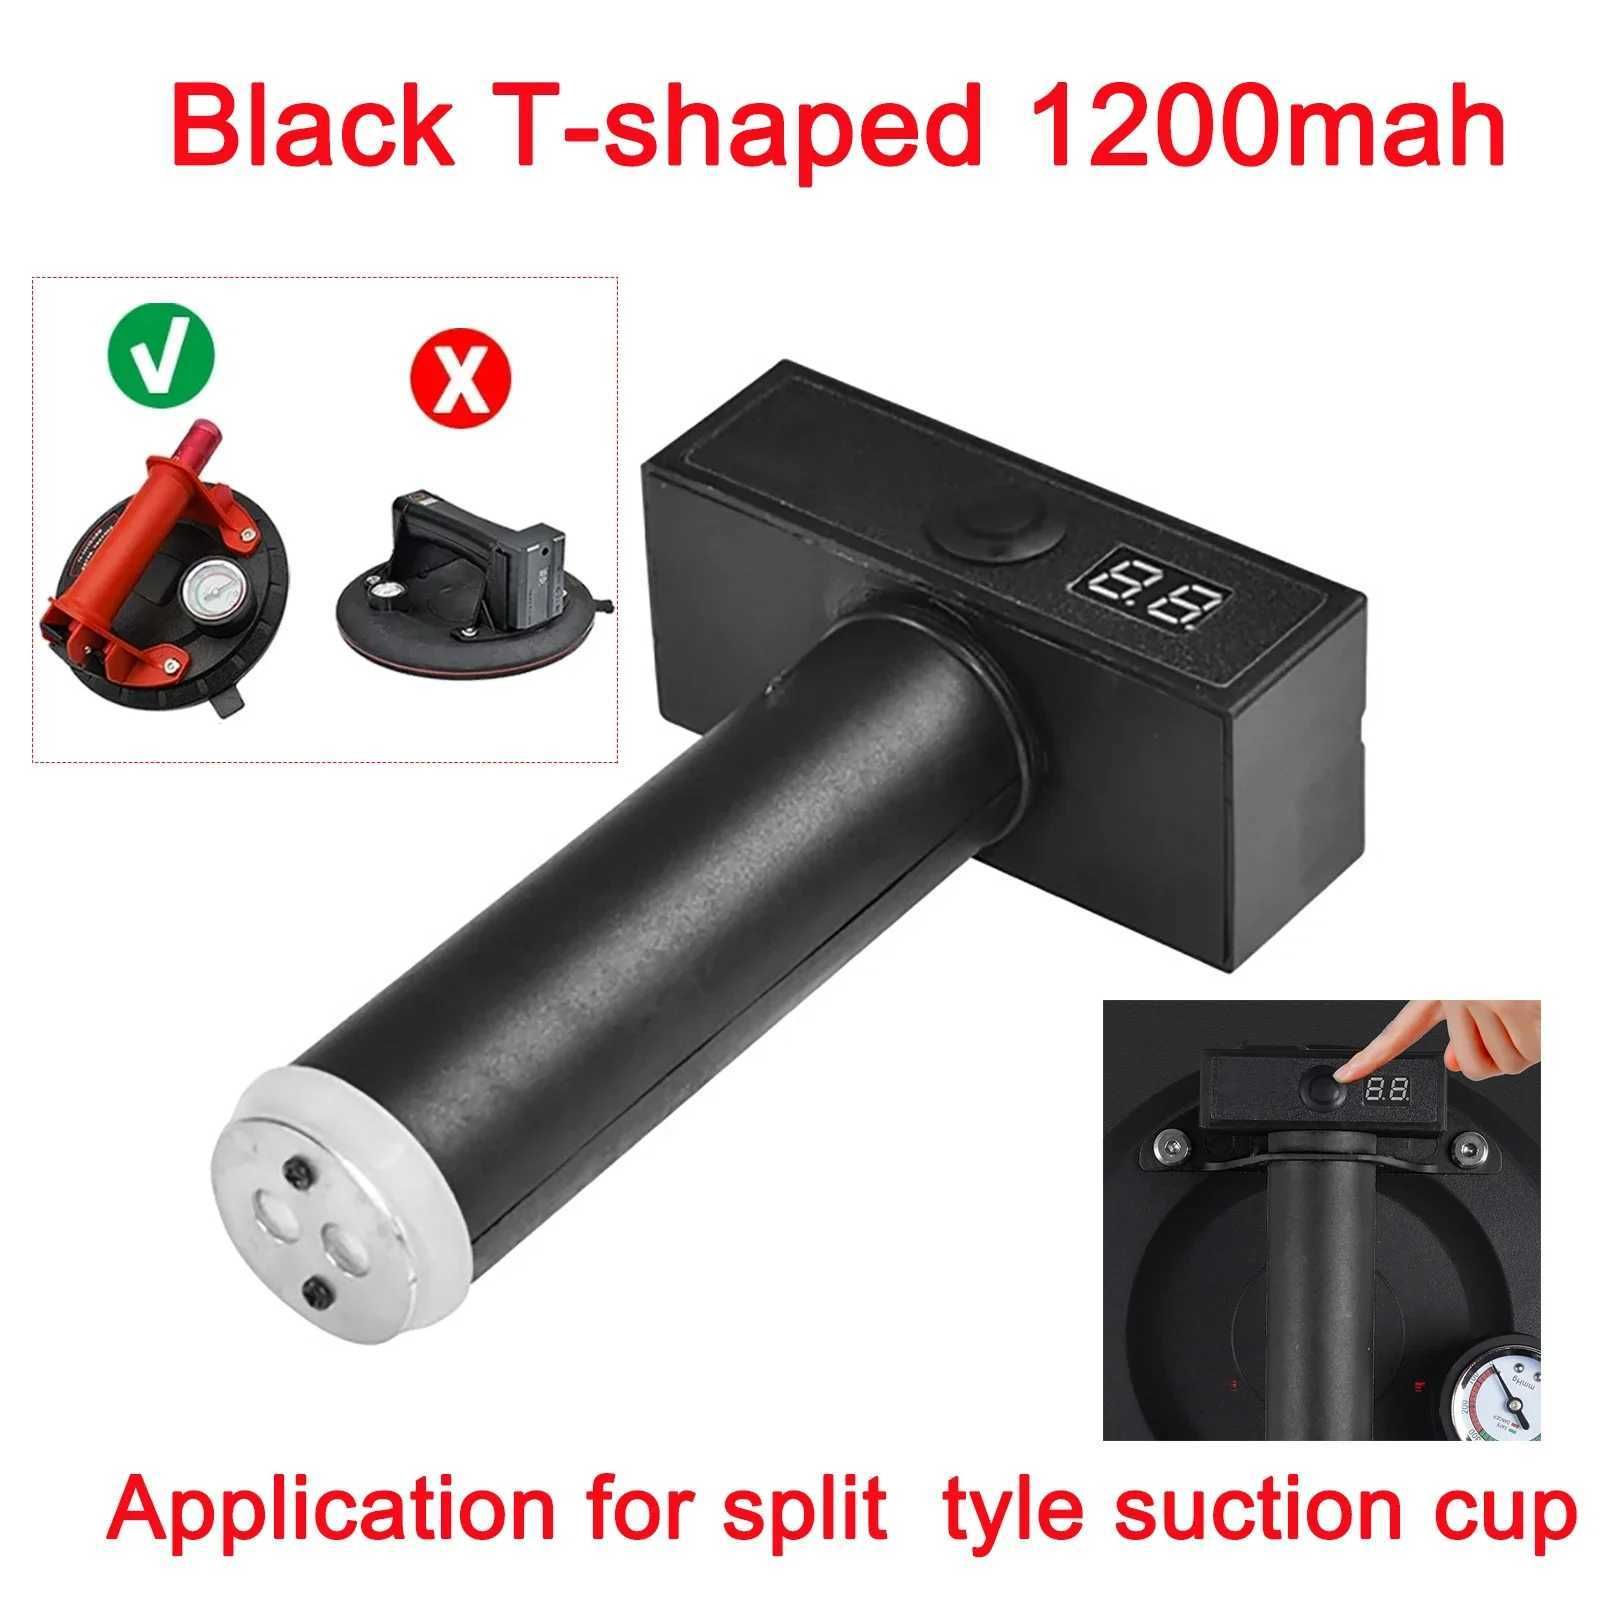 Blackt-shaped1200mah